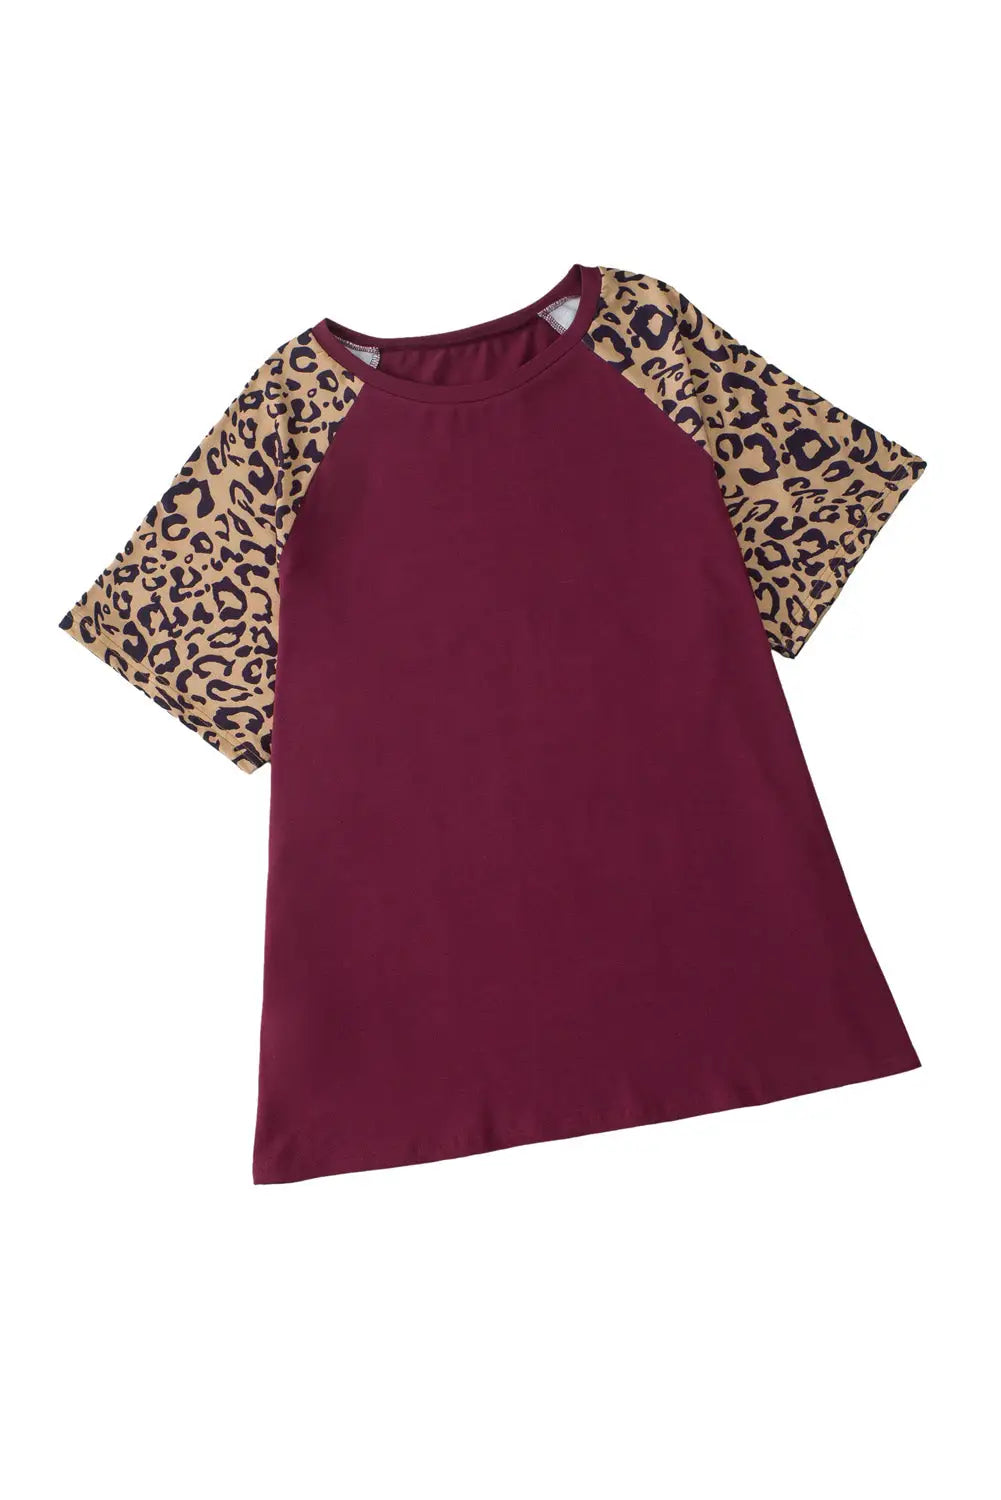 Burgundy contrast leopard raglan sleeve plus size t-shirt